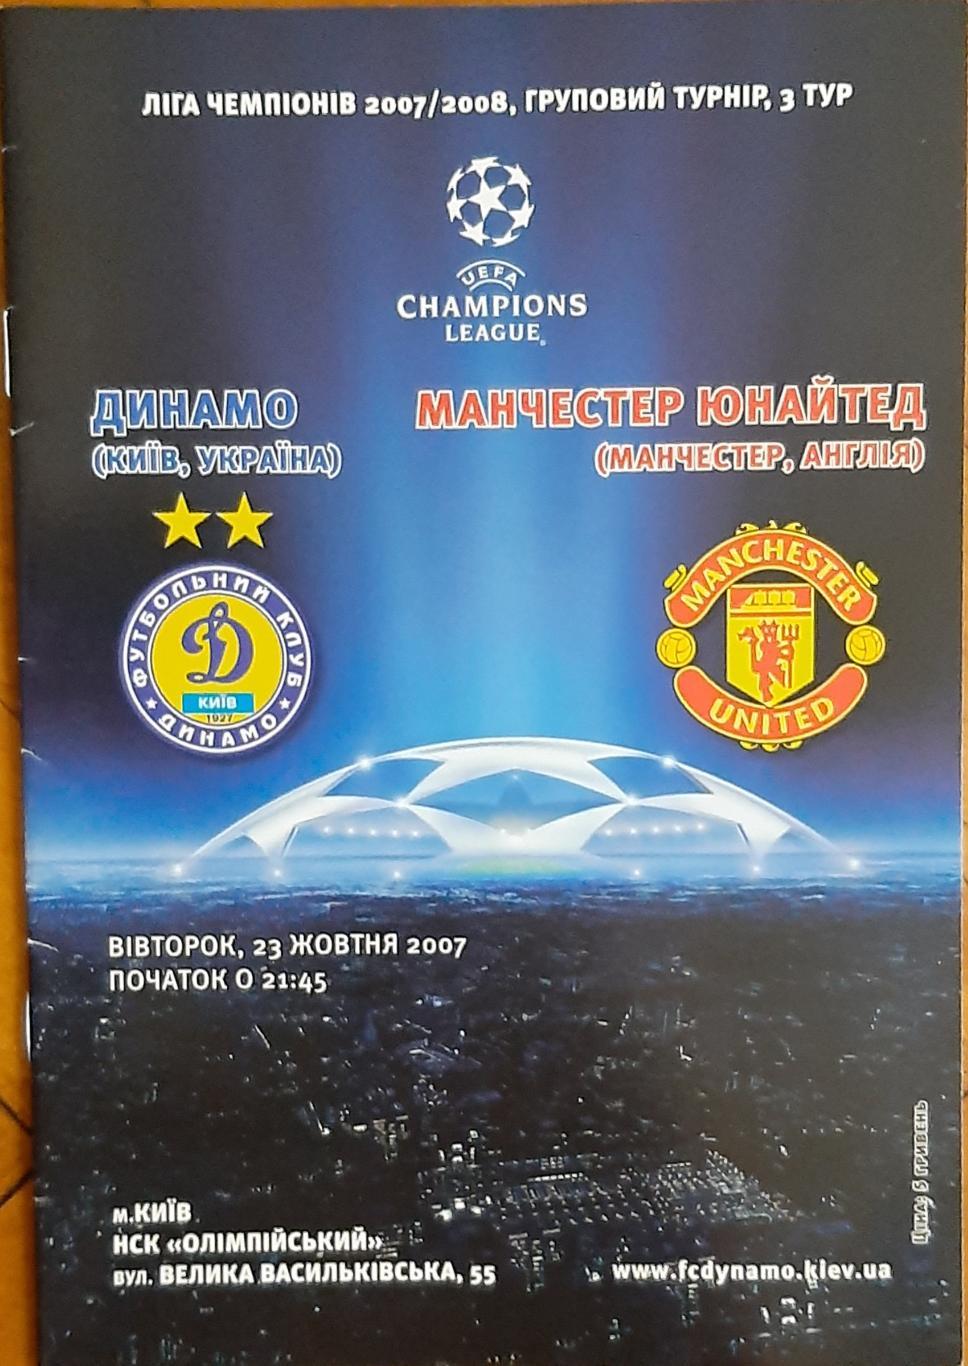 Динамо Киев Украина — Манчестер Юнайтед Англия 23.10.2007. Официальная программа